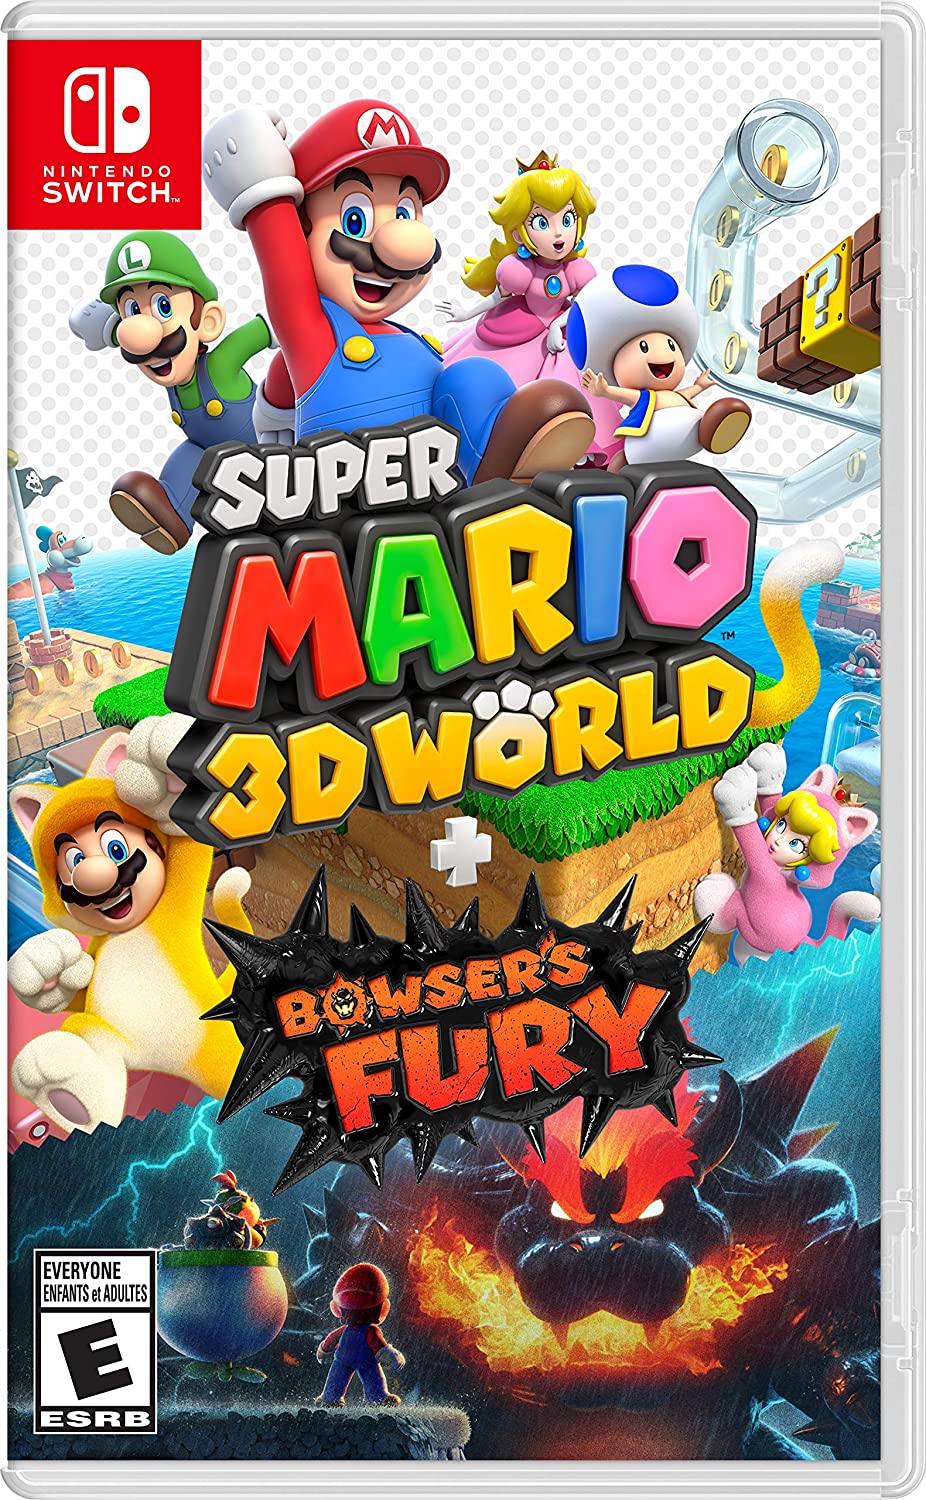 SUPER MARIO 3D WORLD + BOWSERS FURY